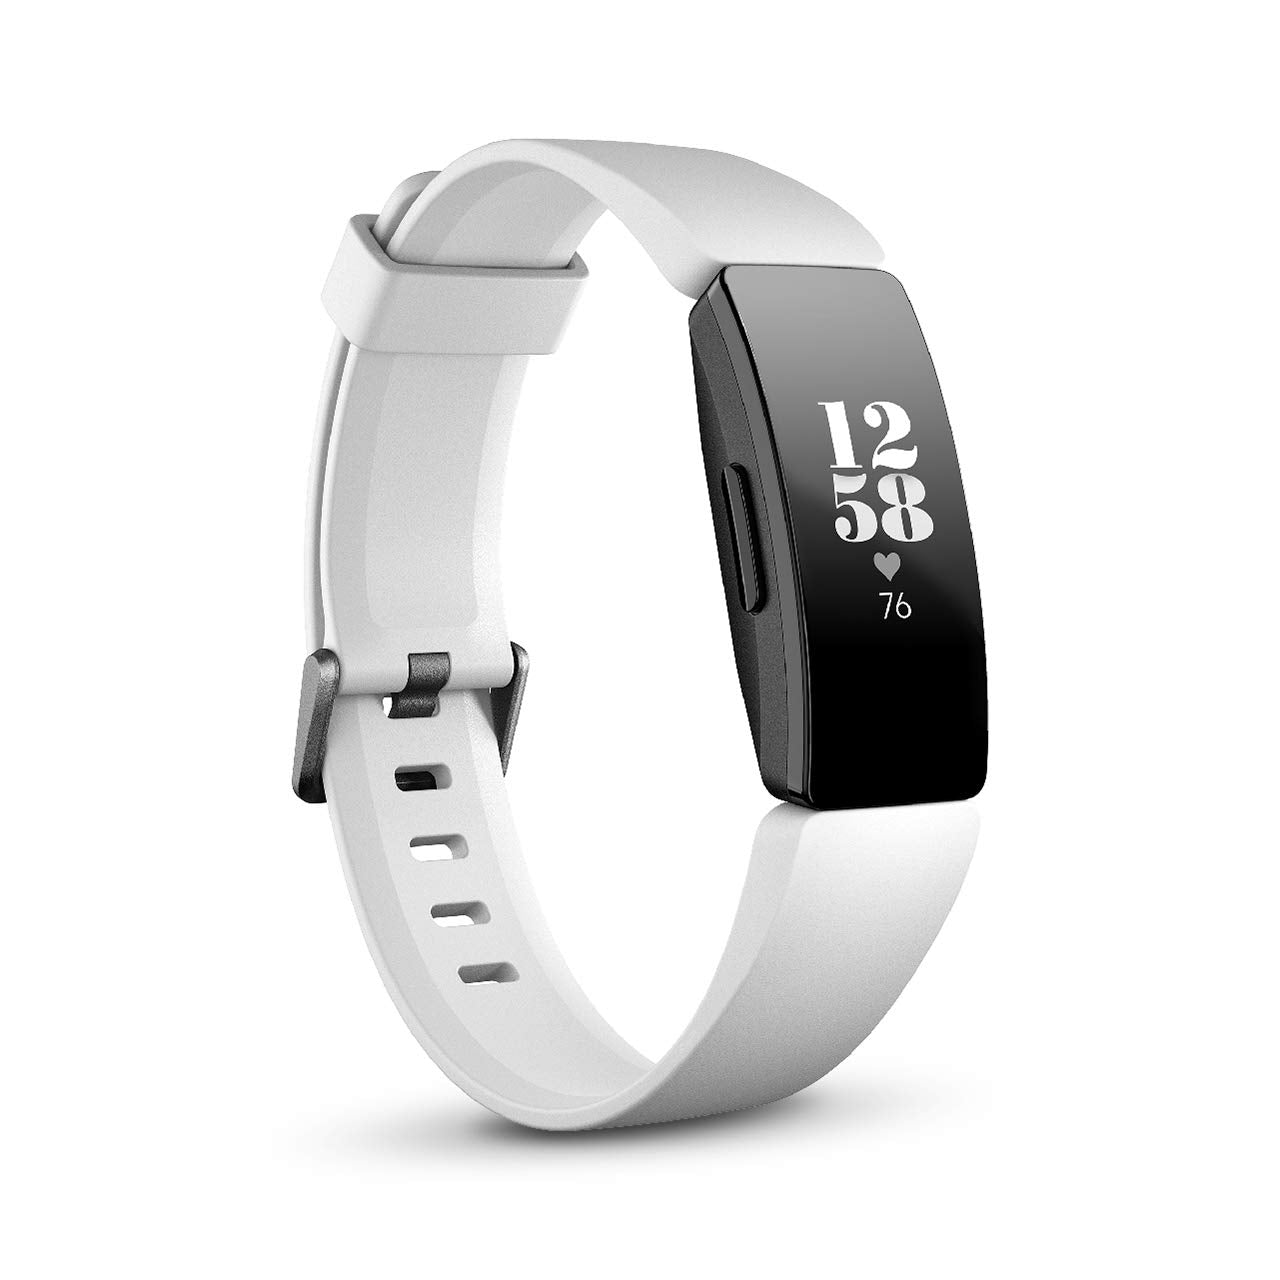 Fitbit Inspire FB413BKWT-FRCJK L/S Size Japan Import  - Very Good